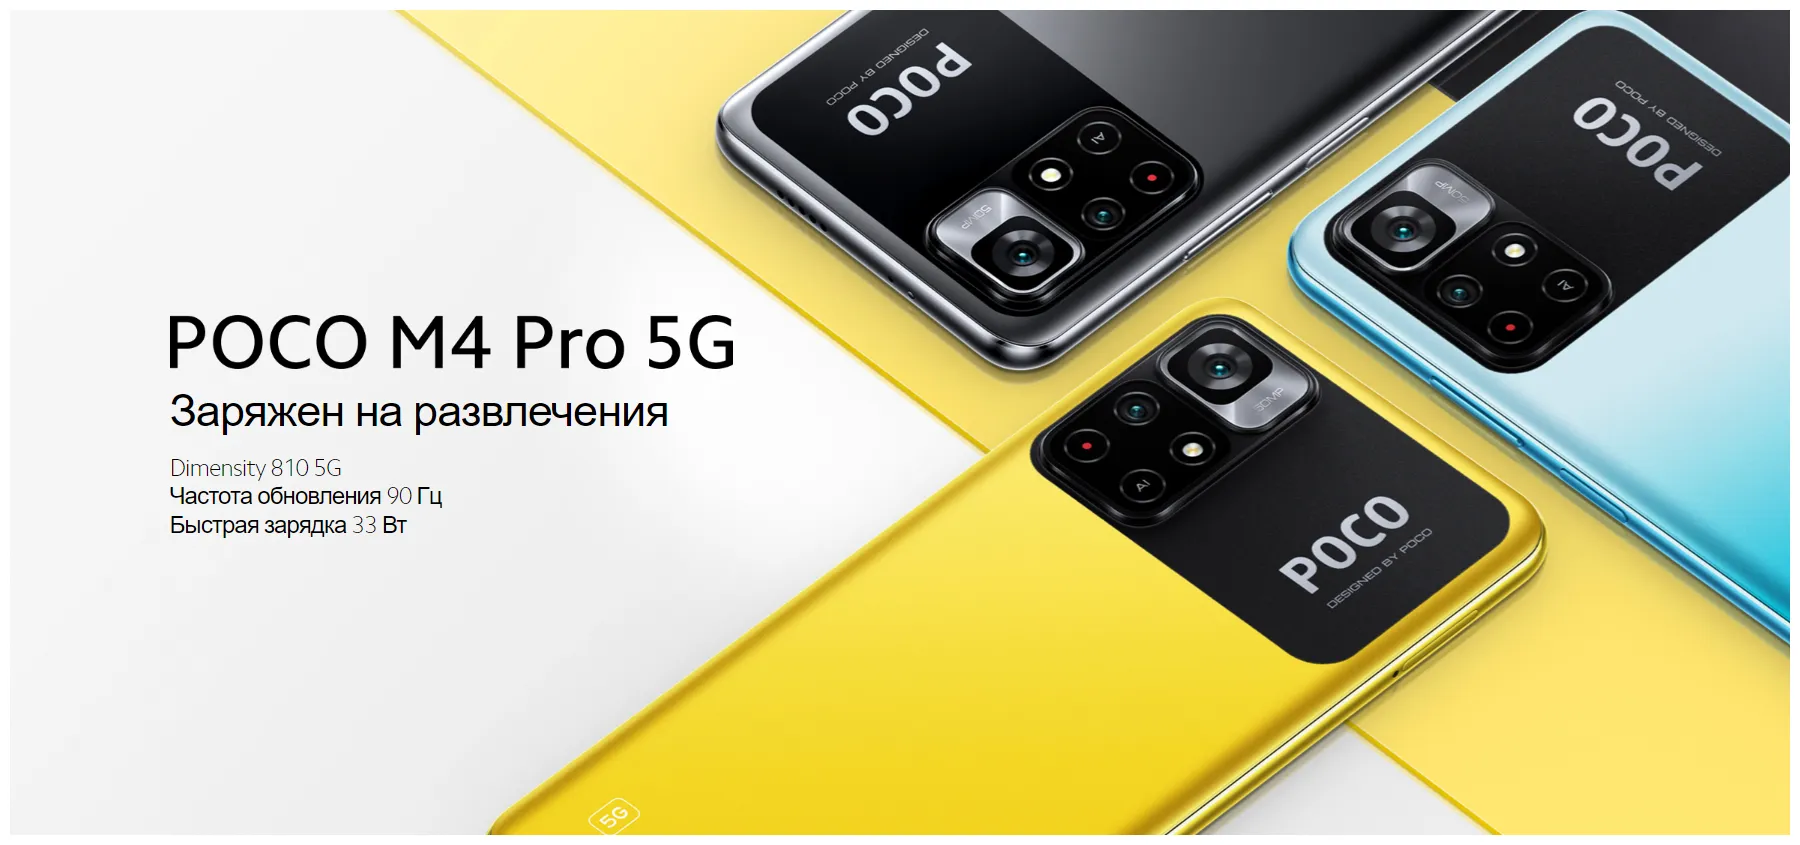 Xiaomi Poco M4 Pro 5G 4/64 GB Global, sovuq ko'k #14